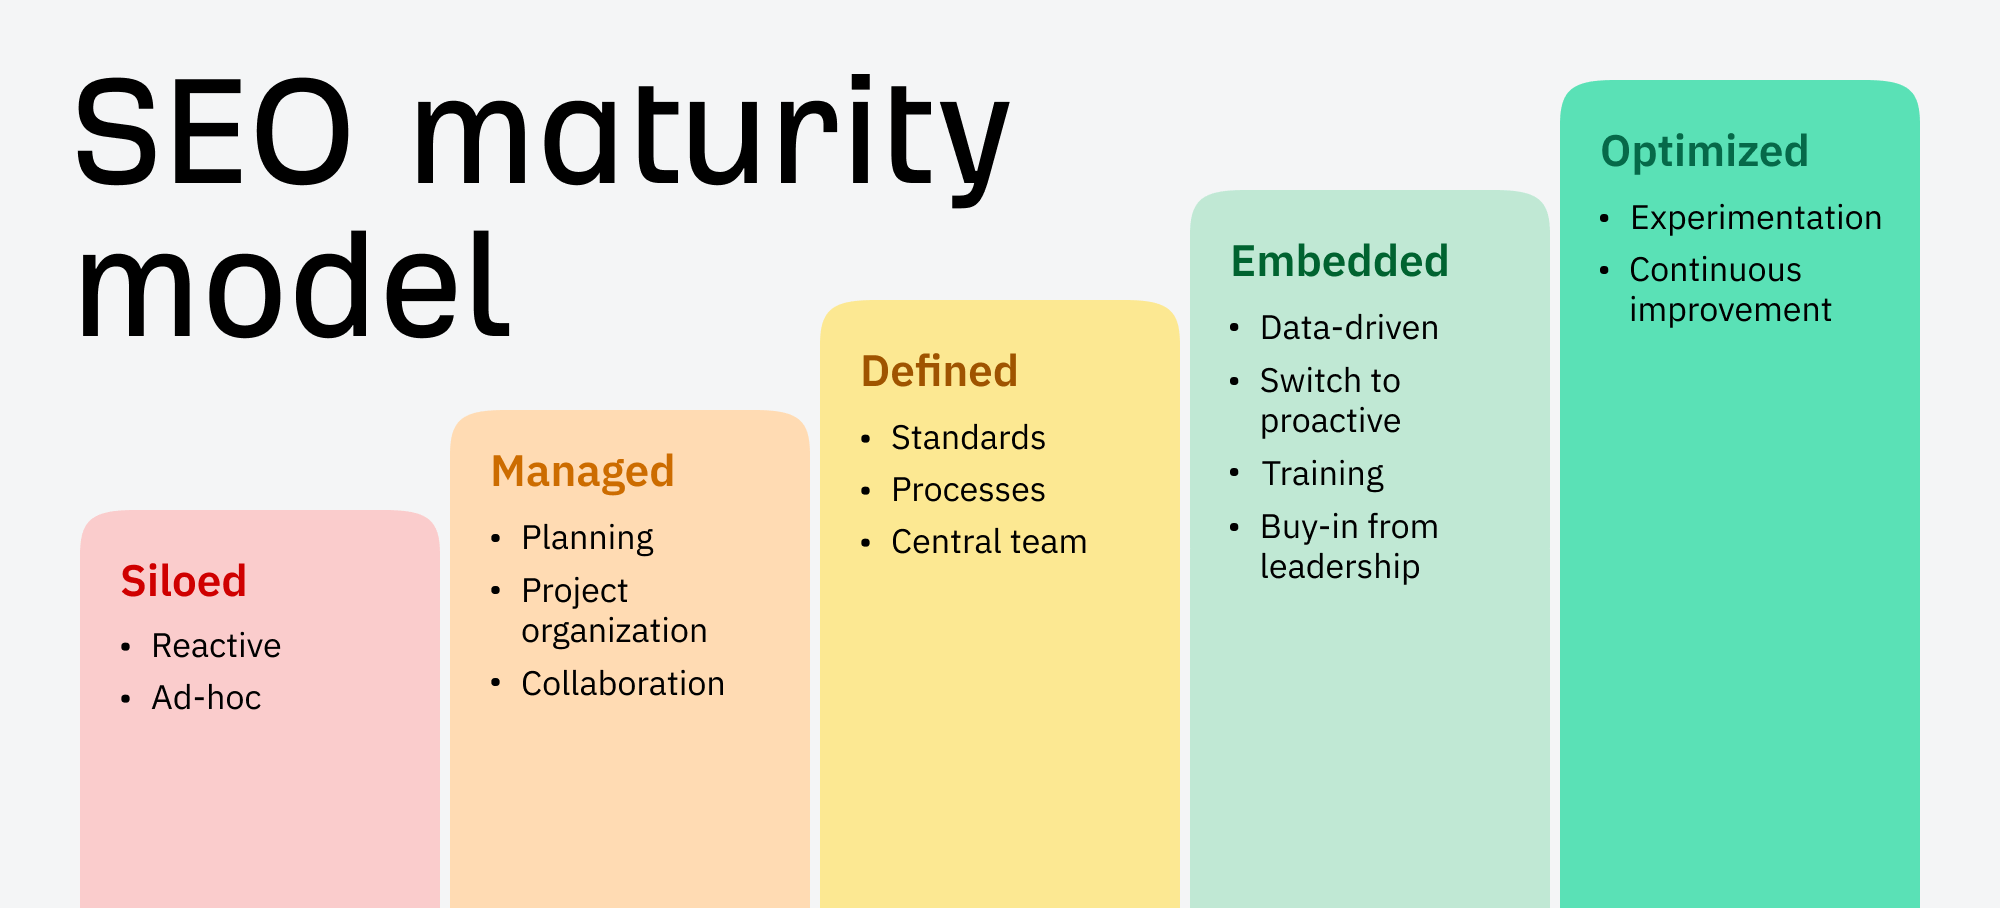 enterprise-seo-maturity-model